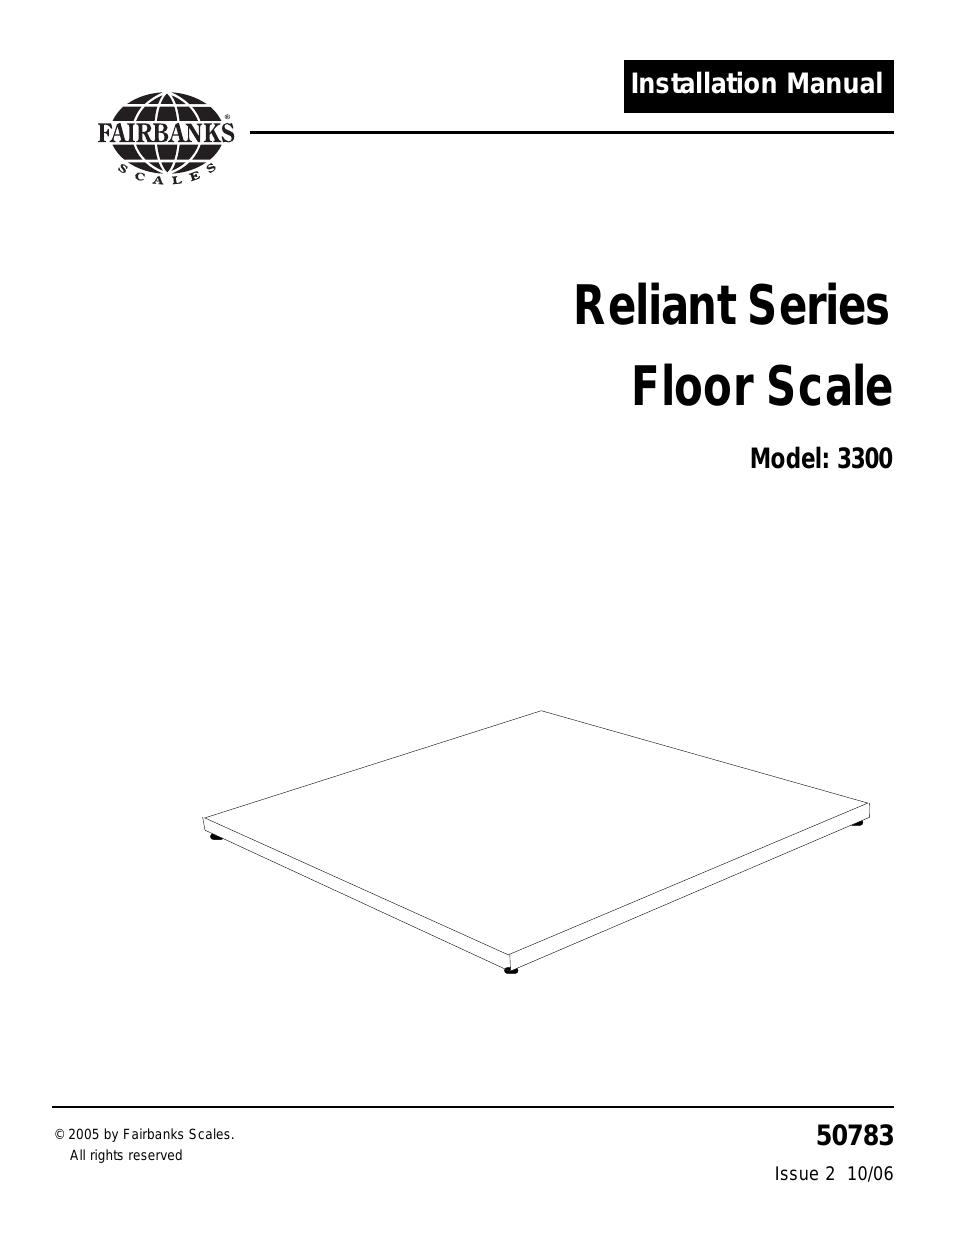 3300 Reliant Series Floor Scale